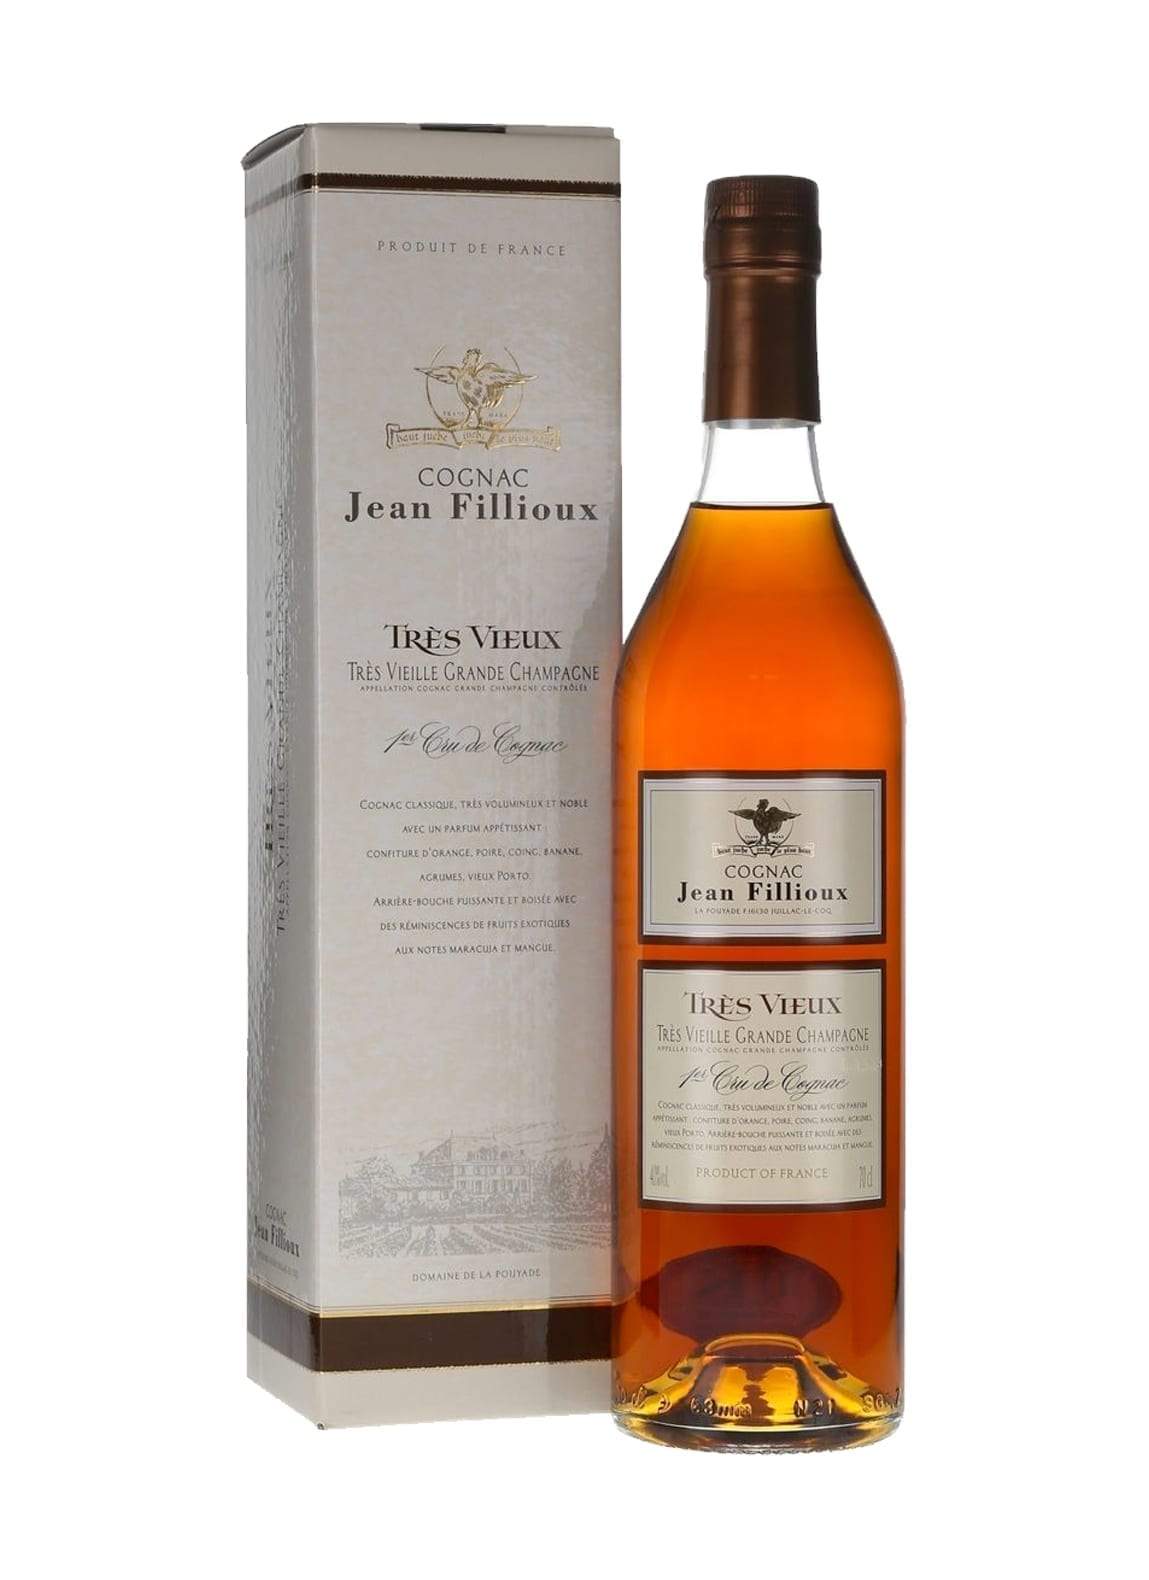 Jean Fillioux Cognac GC XO 25-30 years Tres Vieux 40% 700ml | Brandy | Shop online at Spirits of France